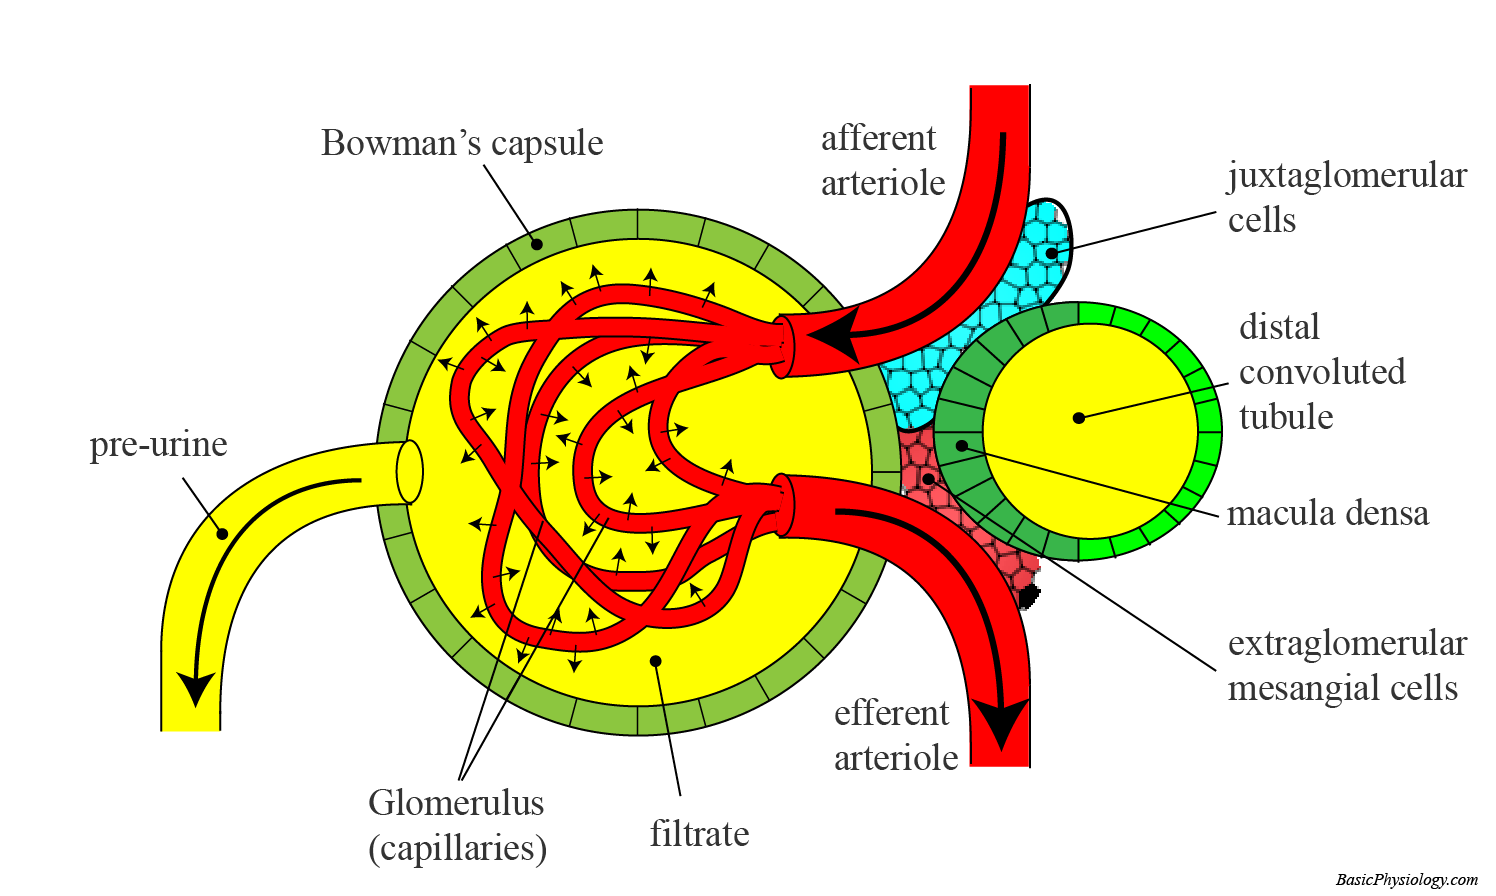 Structure of the The Juxtaglomerular complex